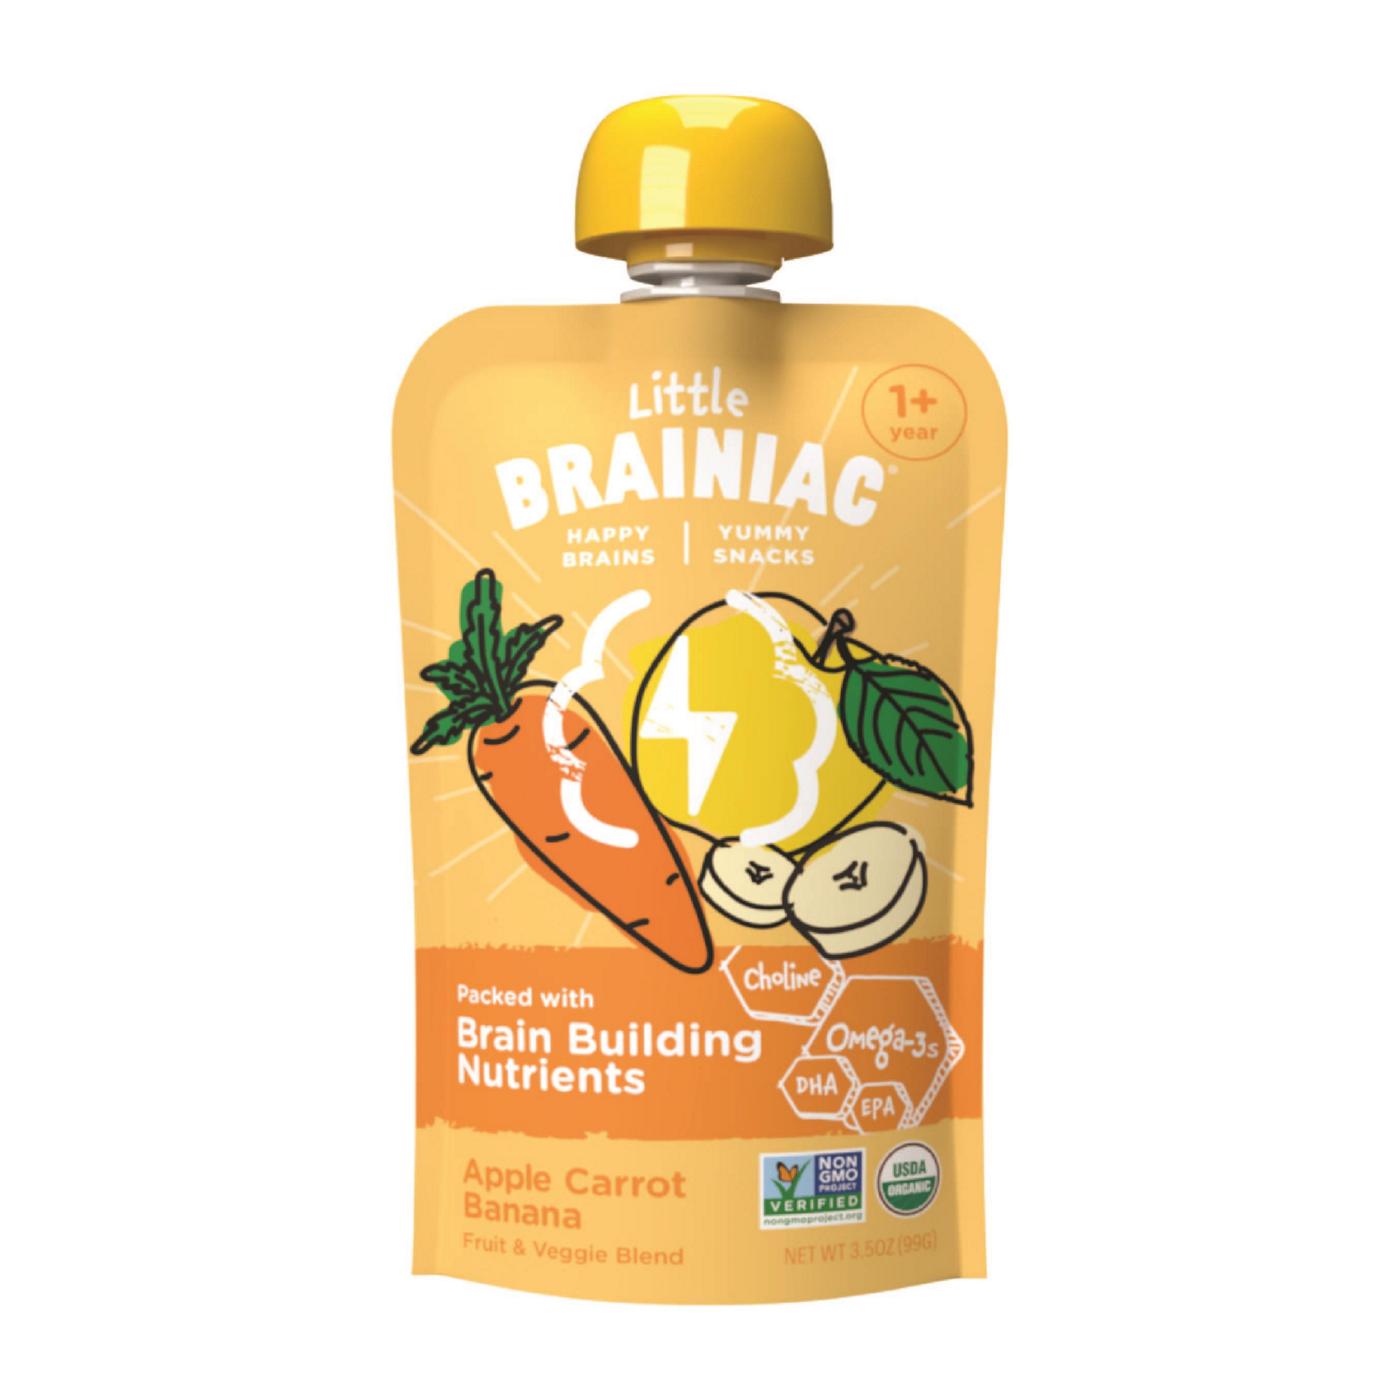 Little Brainiac Organic Baby Food Pouch - Apple Carrot & Banana; image 1 of 5